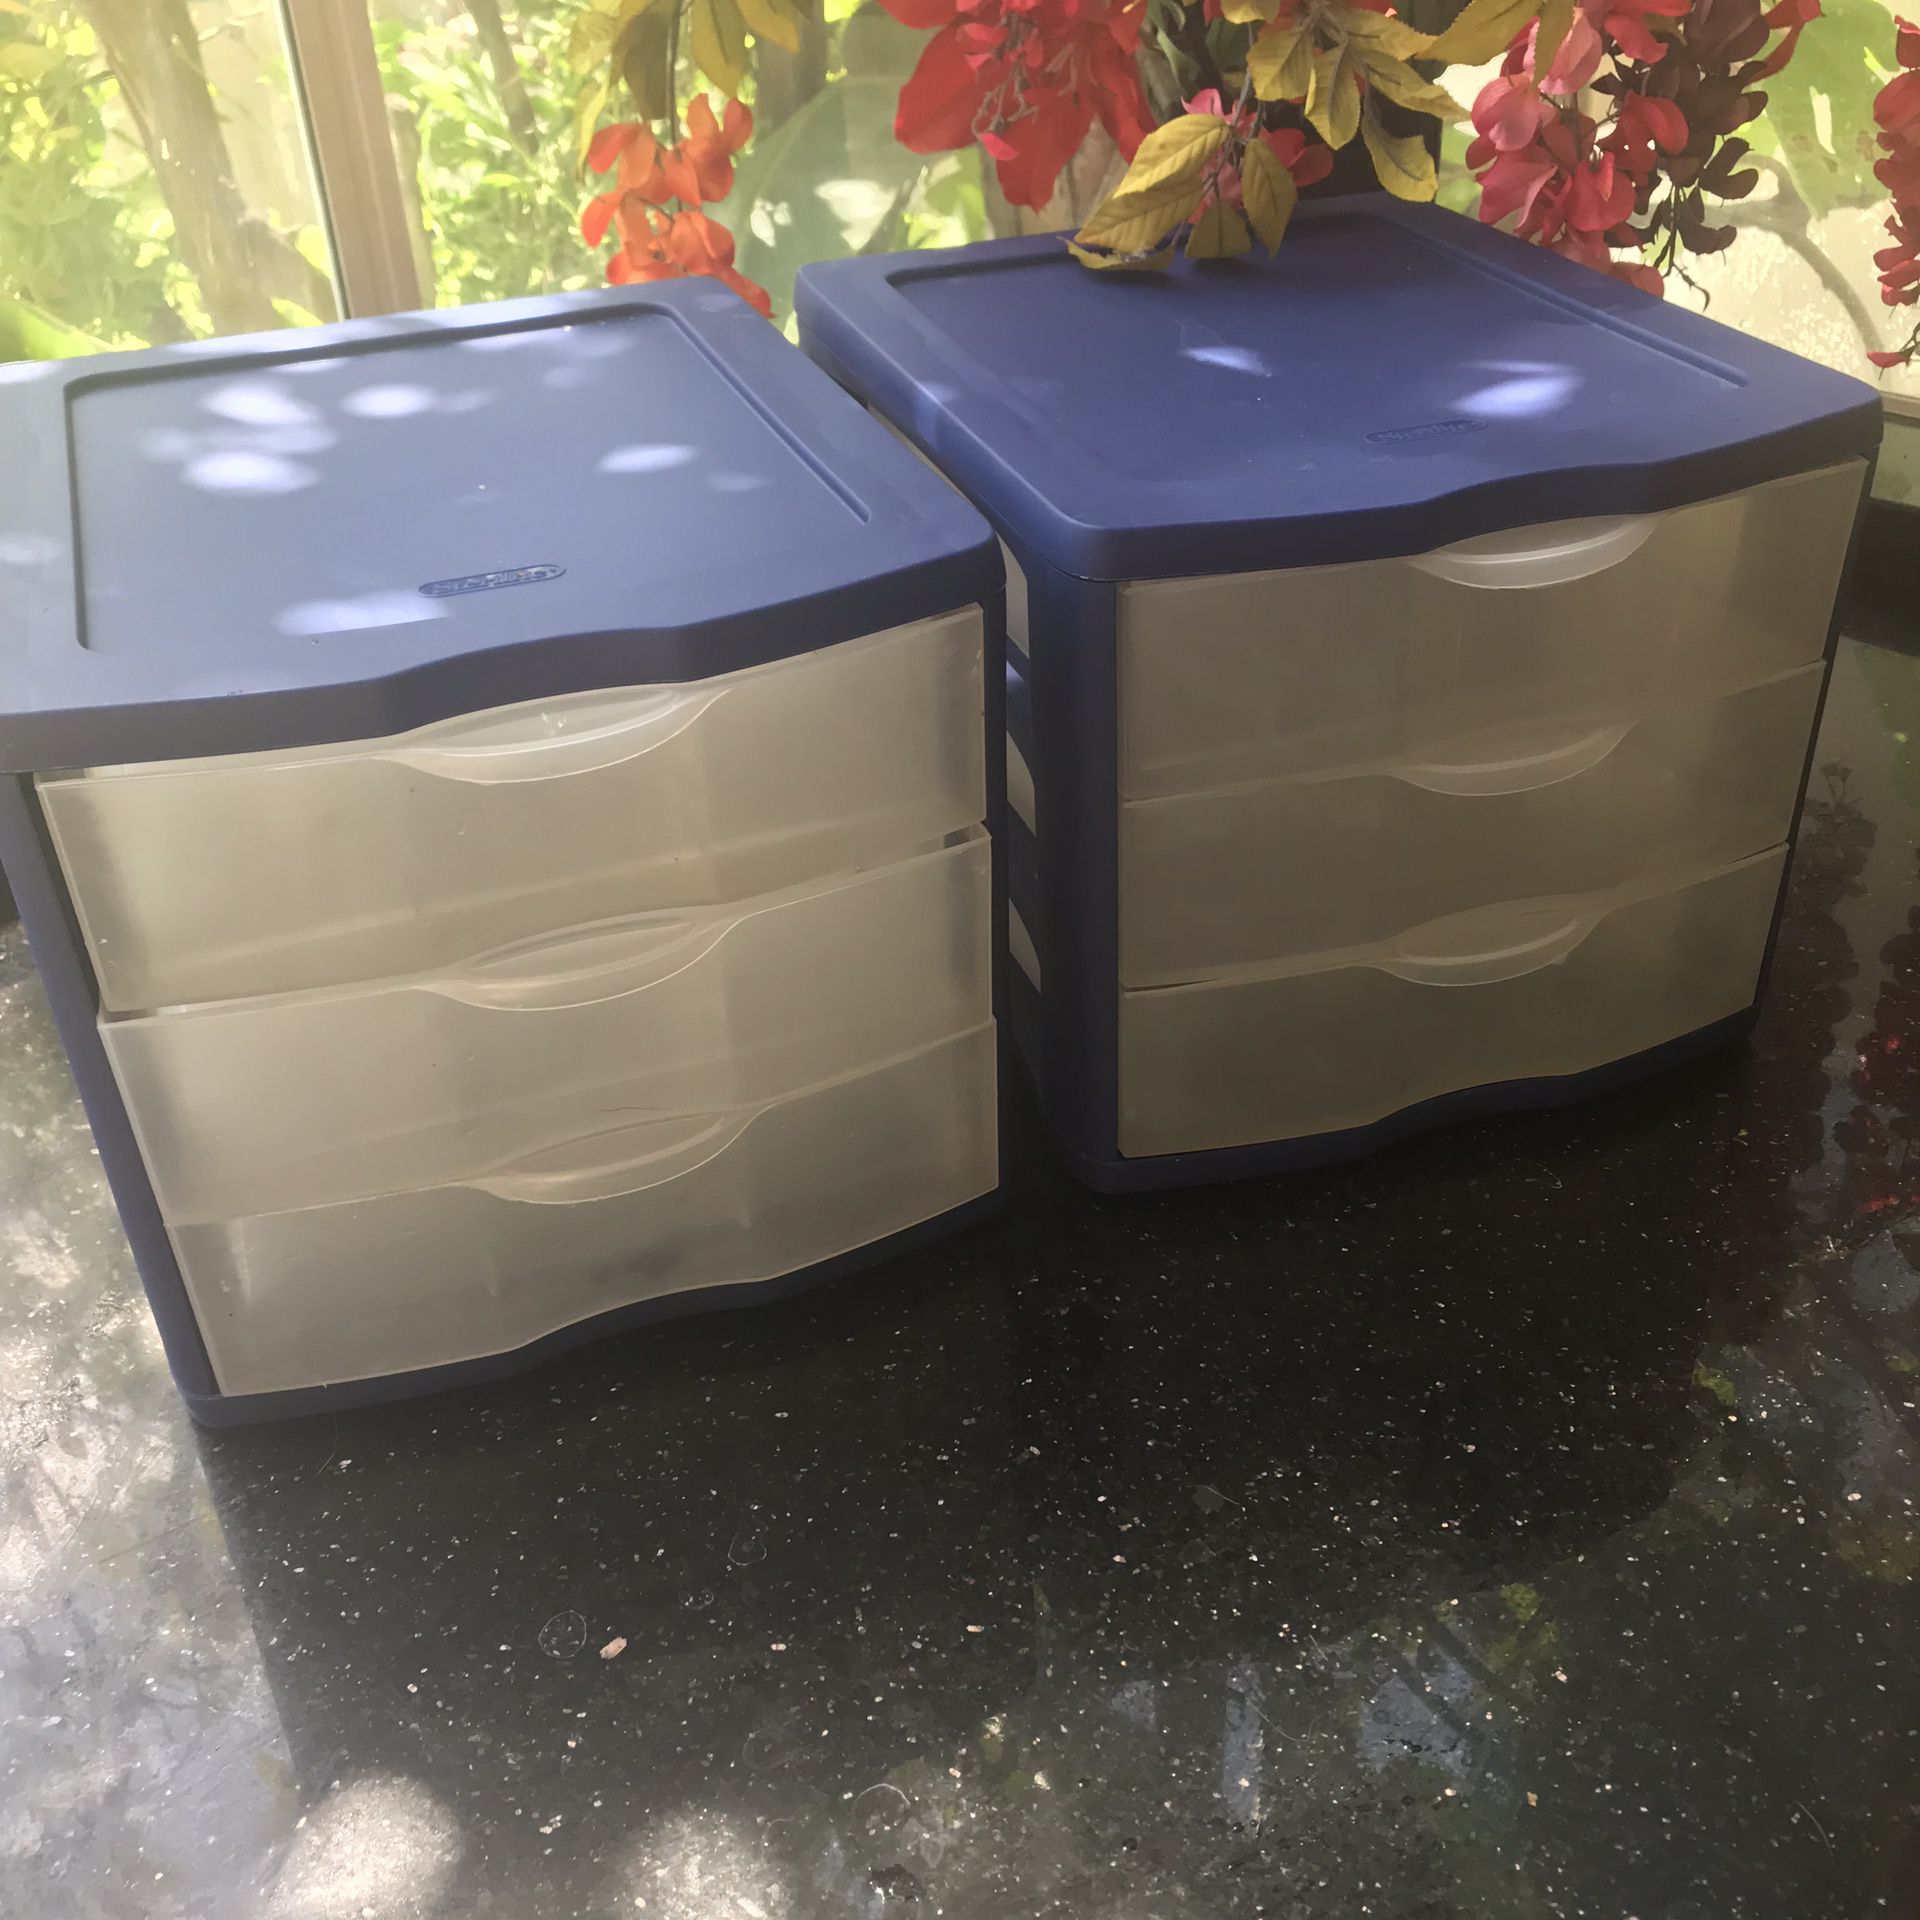 2 x sterilite 3 drawer plastic organizers